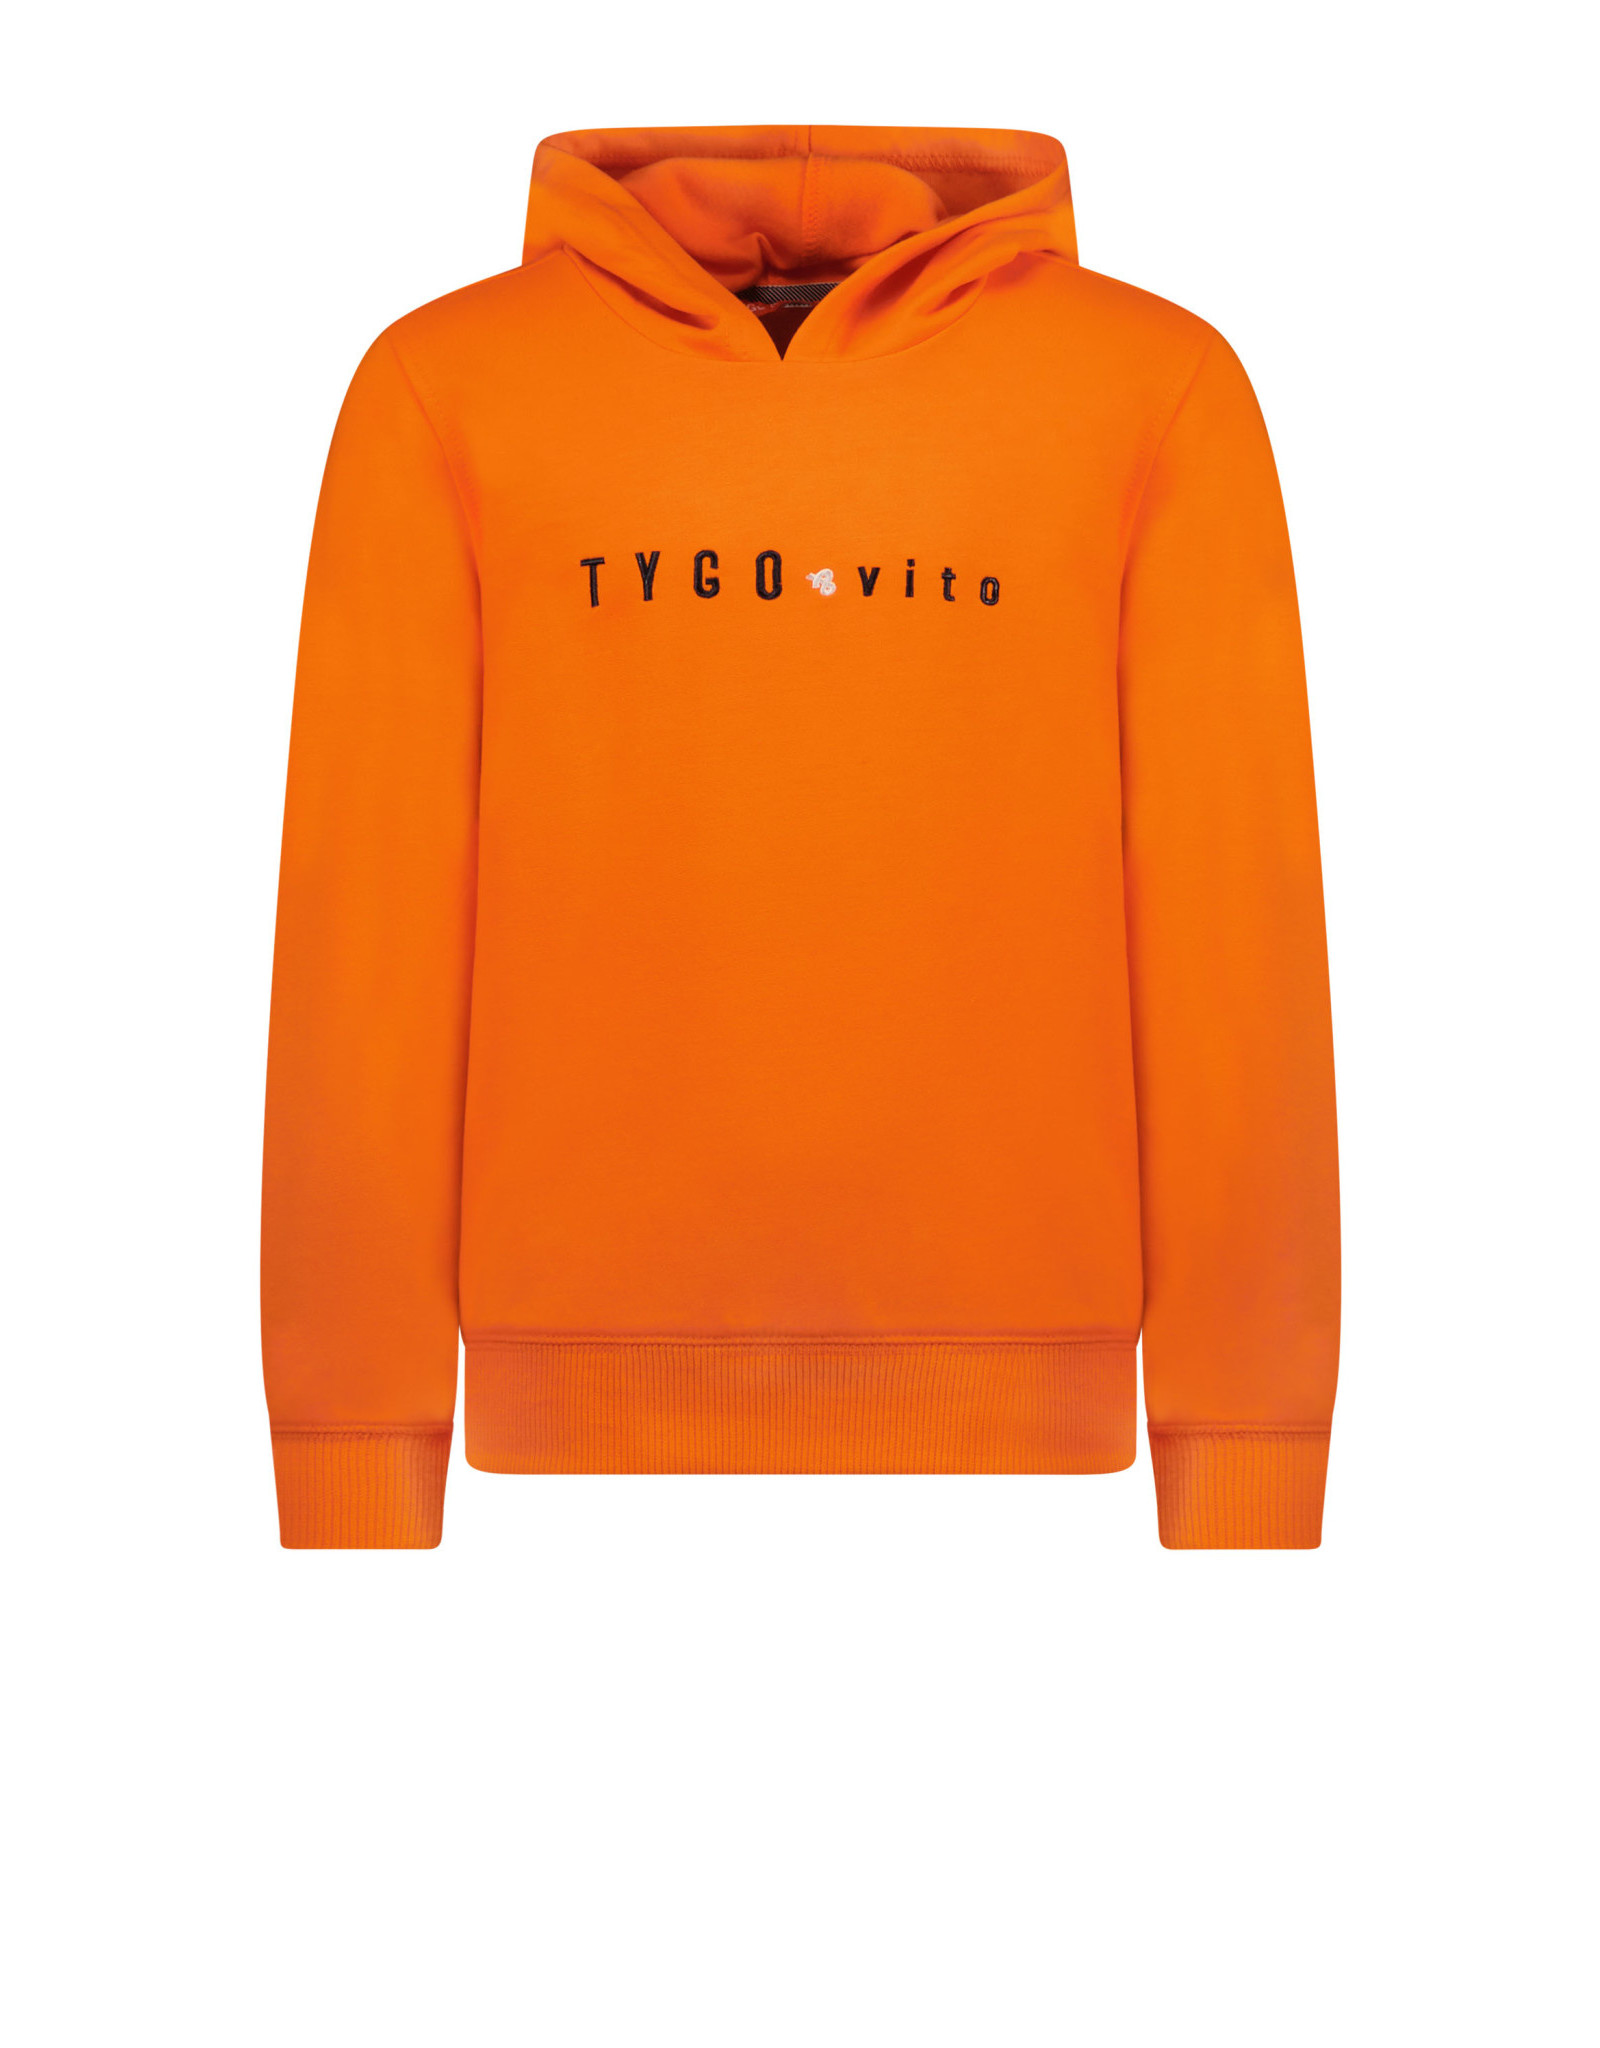 Tygo & vito TV boys hoodie TYGO & vito emb Orange Clownfish NOS